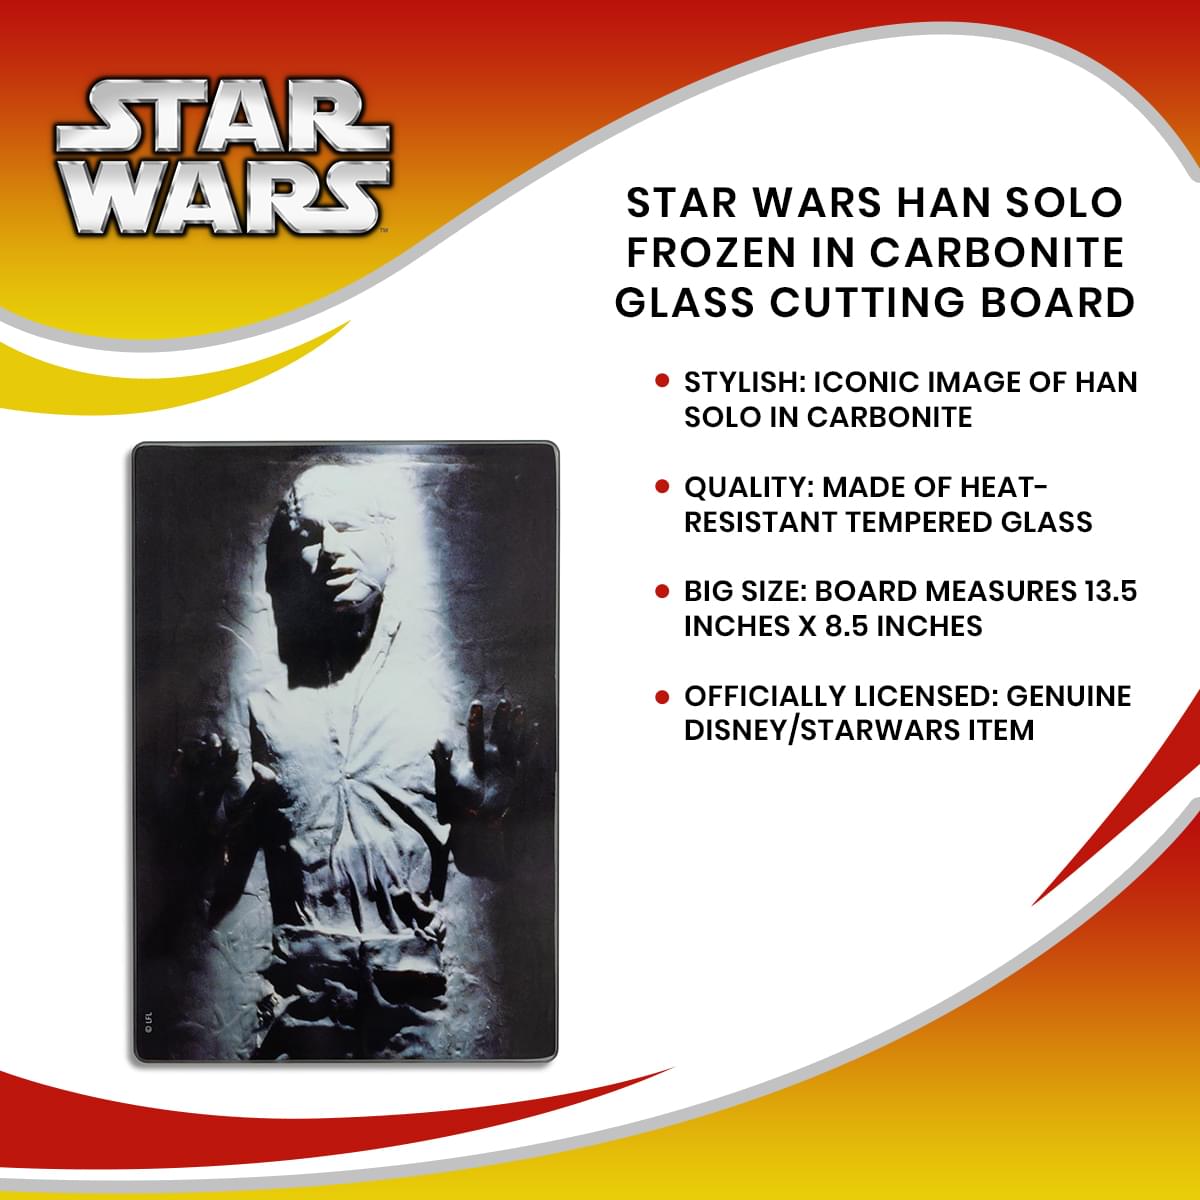 Star Wars Han Solo Frozen in Carbonite Glass Cutting Board